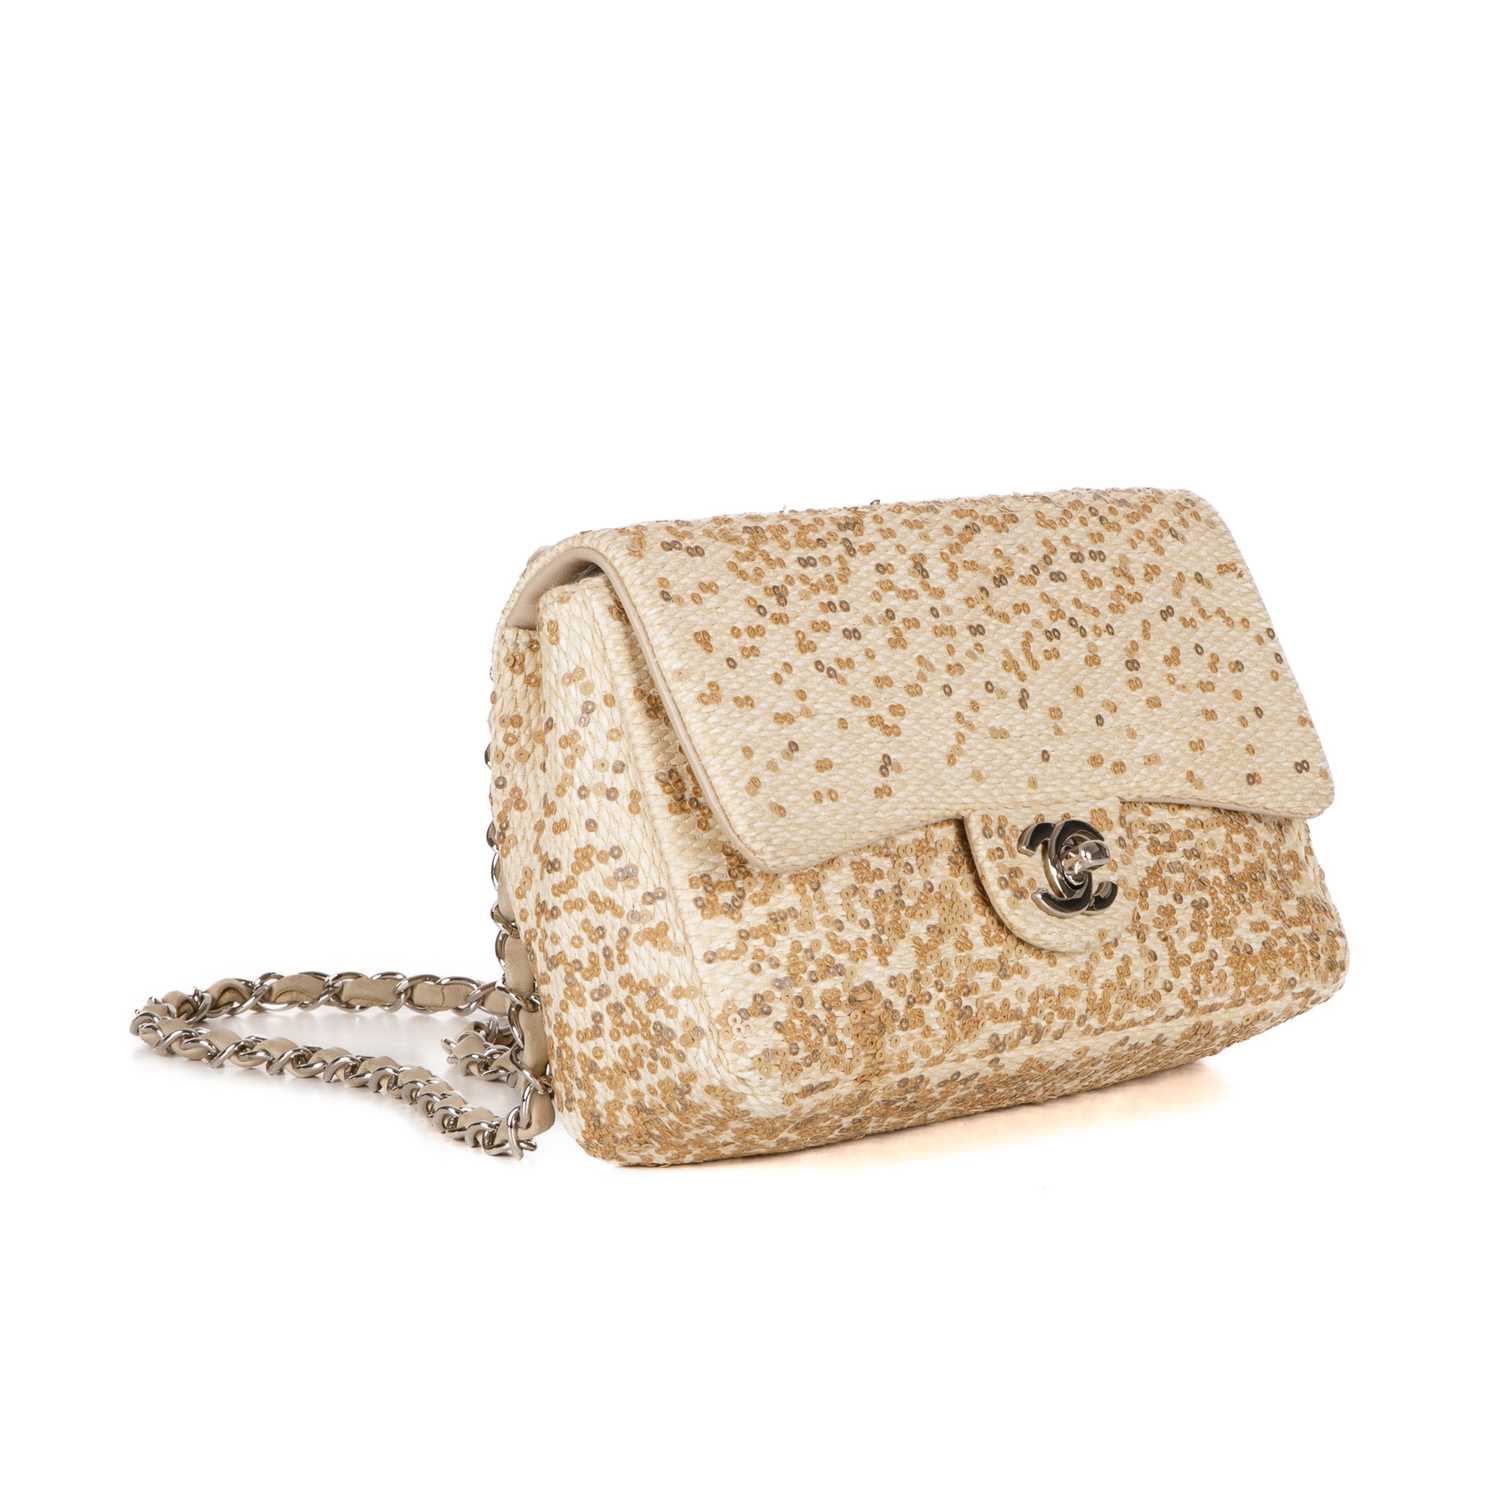 Chanel, a Raffia Sequin Single Flap handbag, designed with a woven cream raffia exterior accented - Image 3 of 4